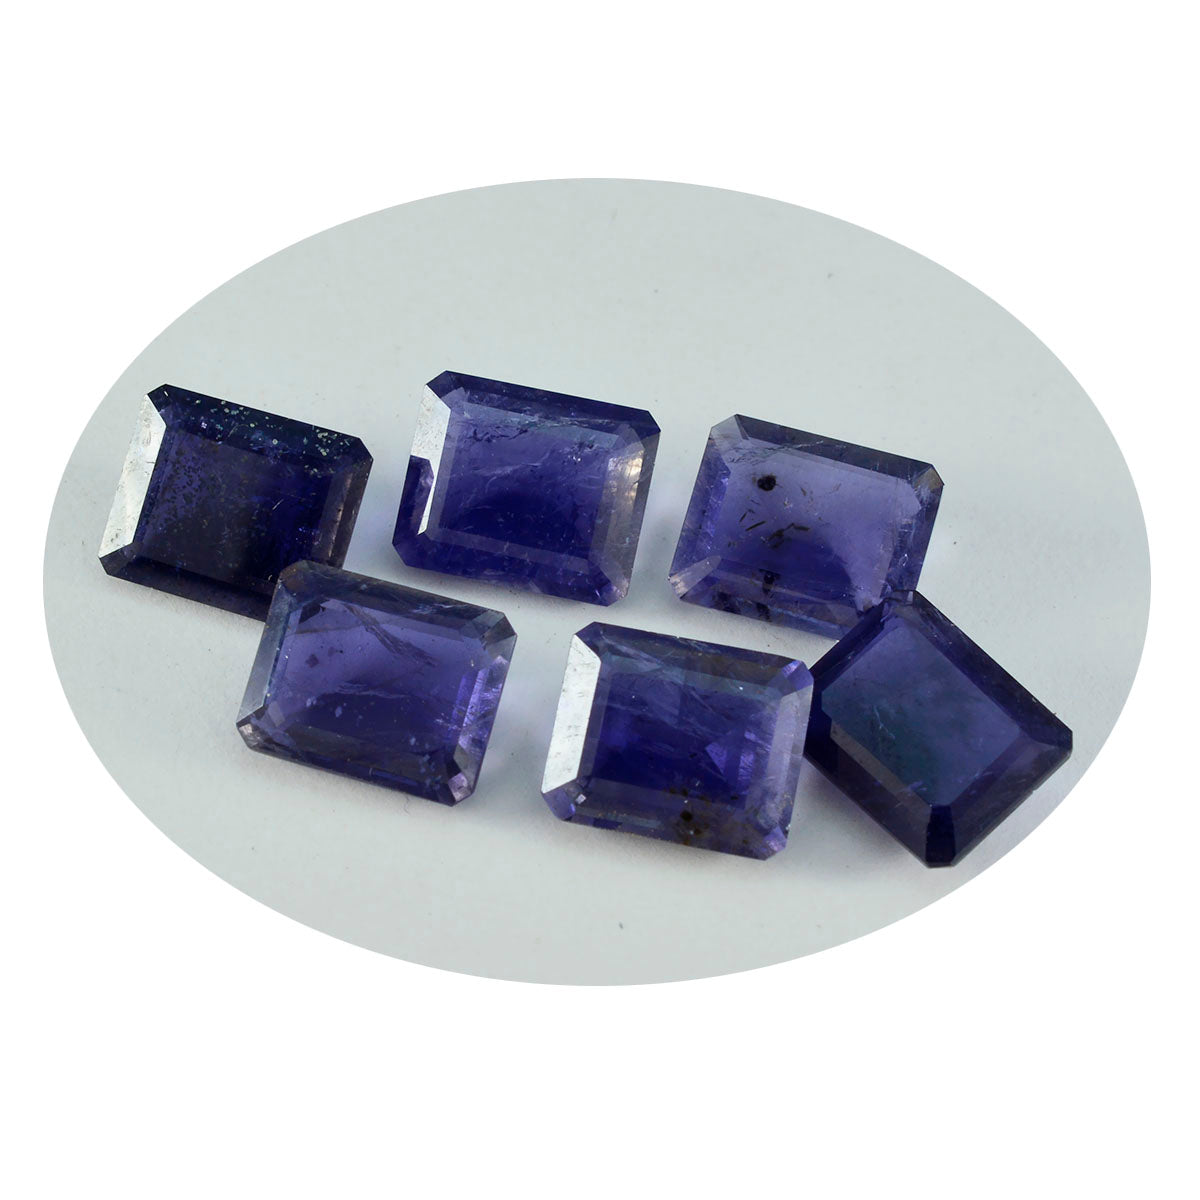 Riyogems 1PC Blue Iolite Faceted 12x16 mm Octagon Shape A+ Quality Gems